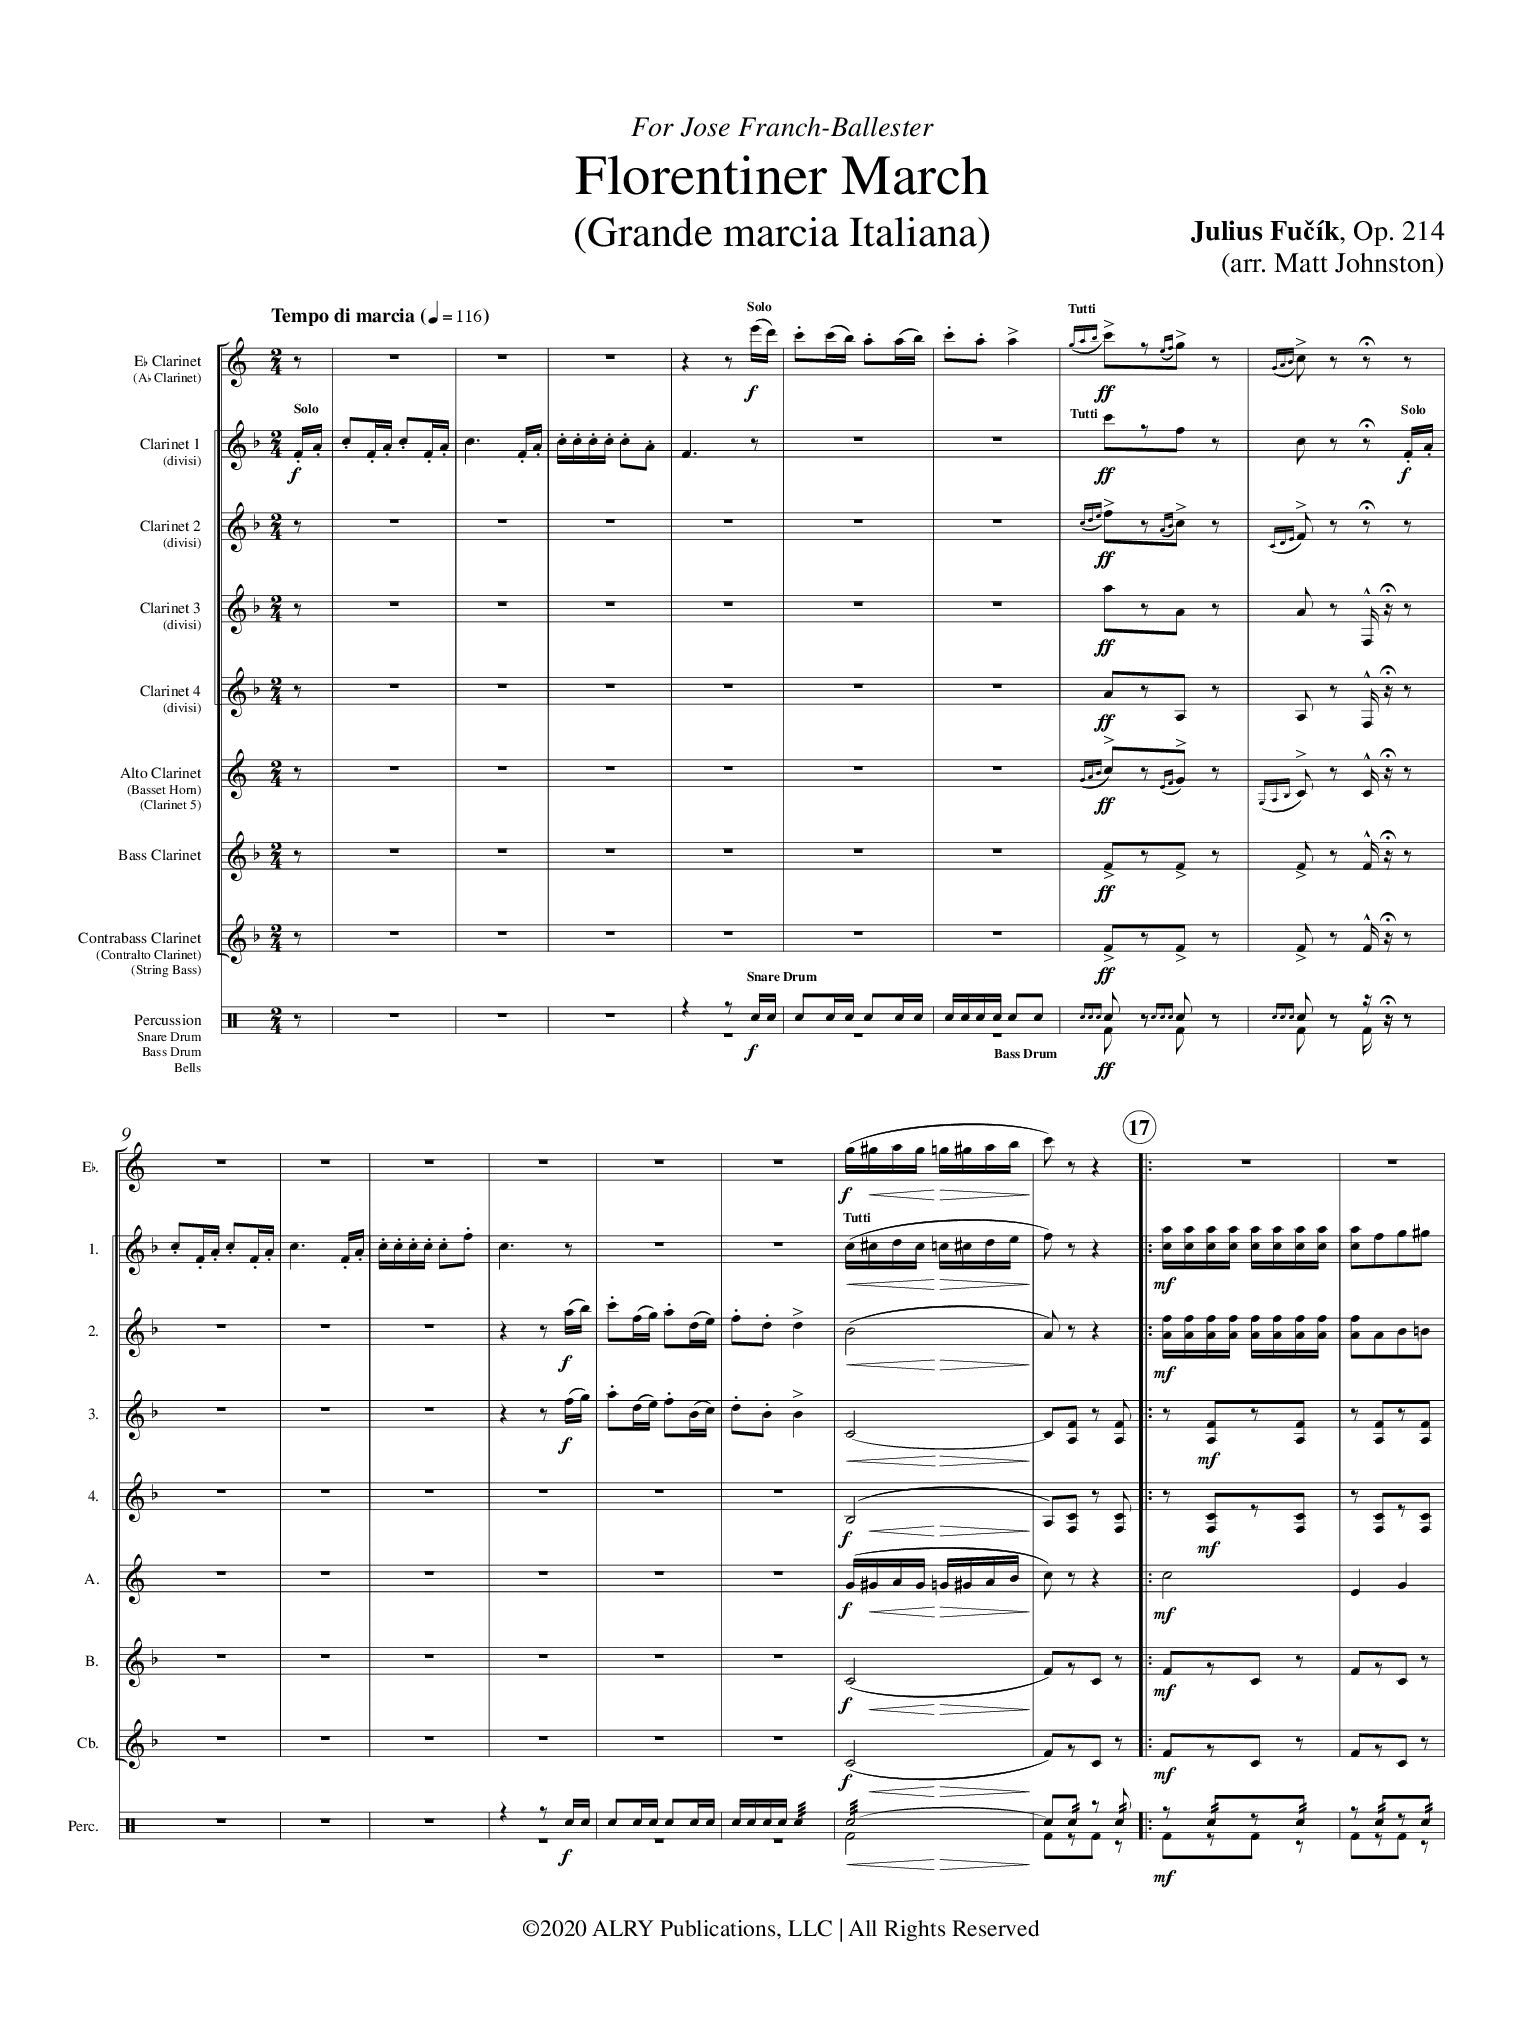 Fucik (arr. Matt Johnston) - Florentiner March for Clarinet Choir